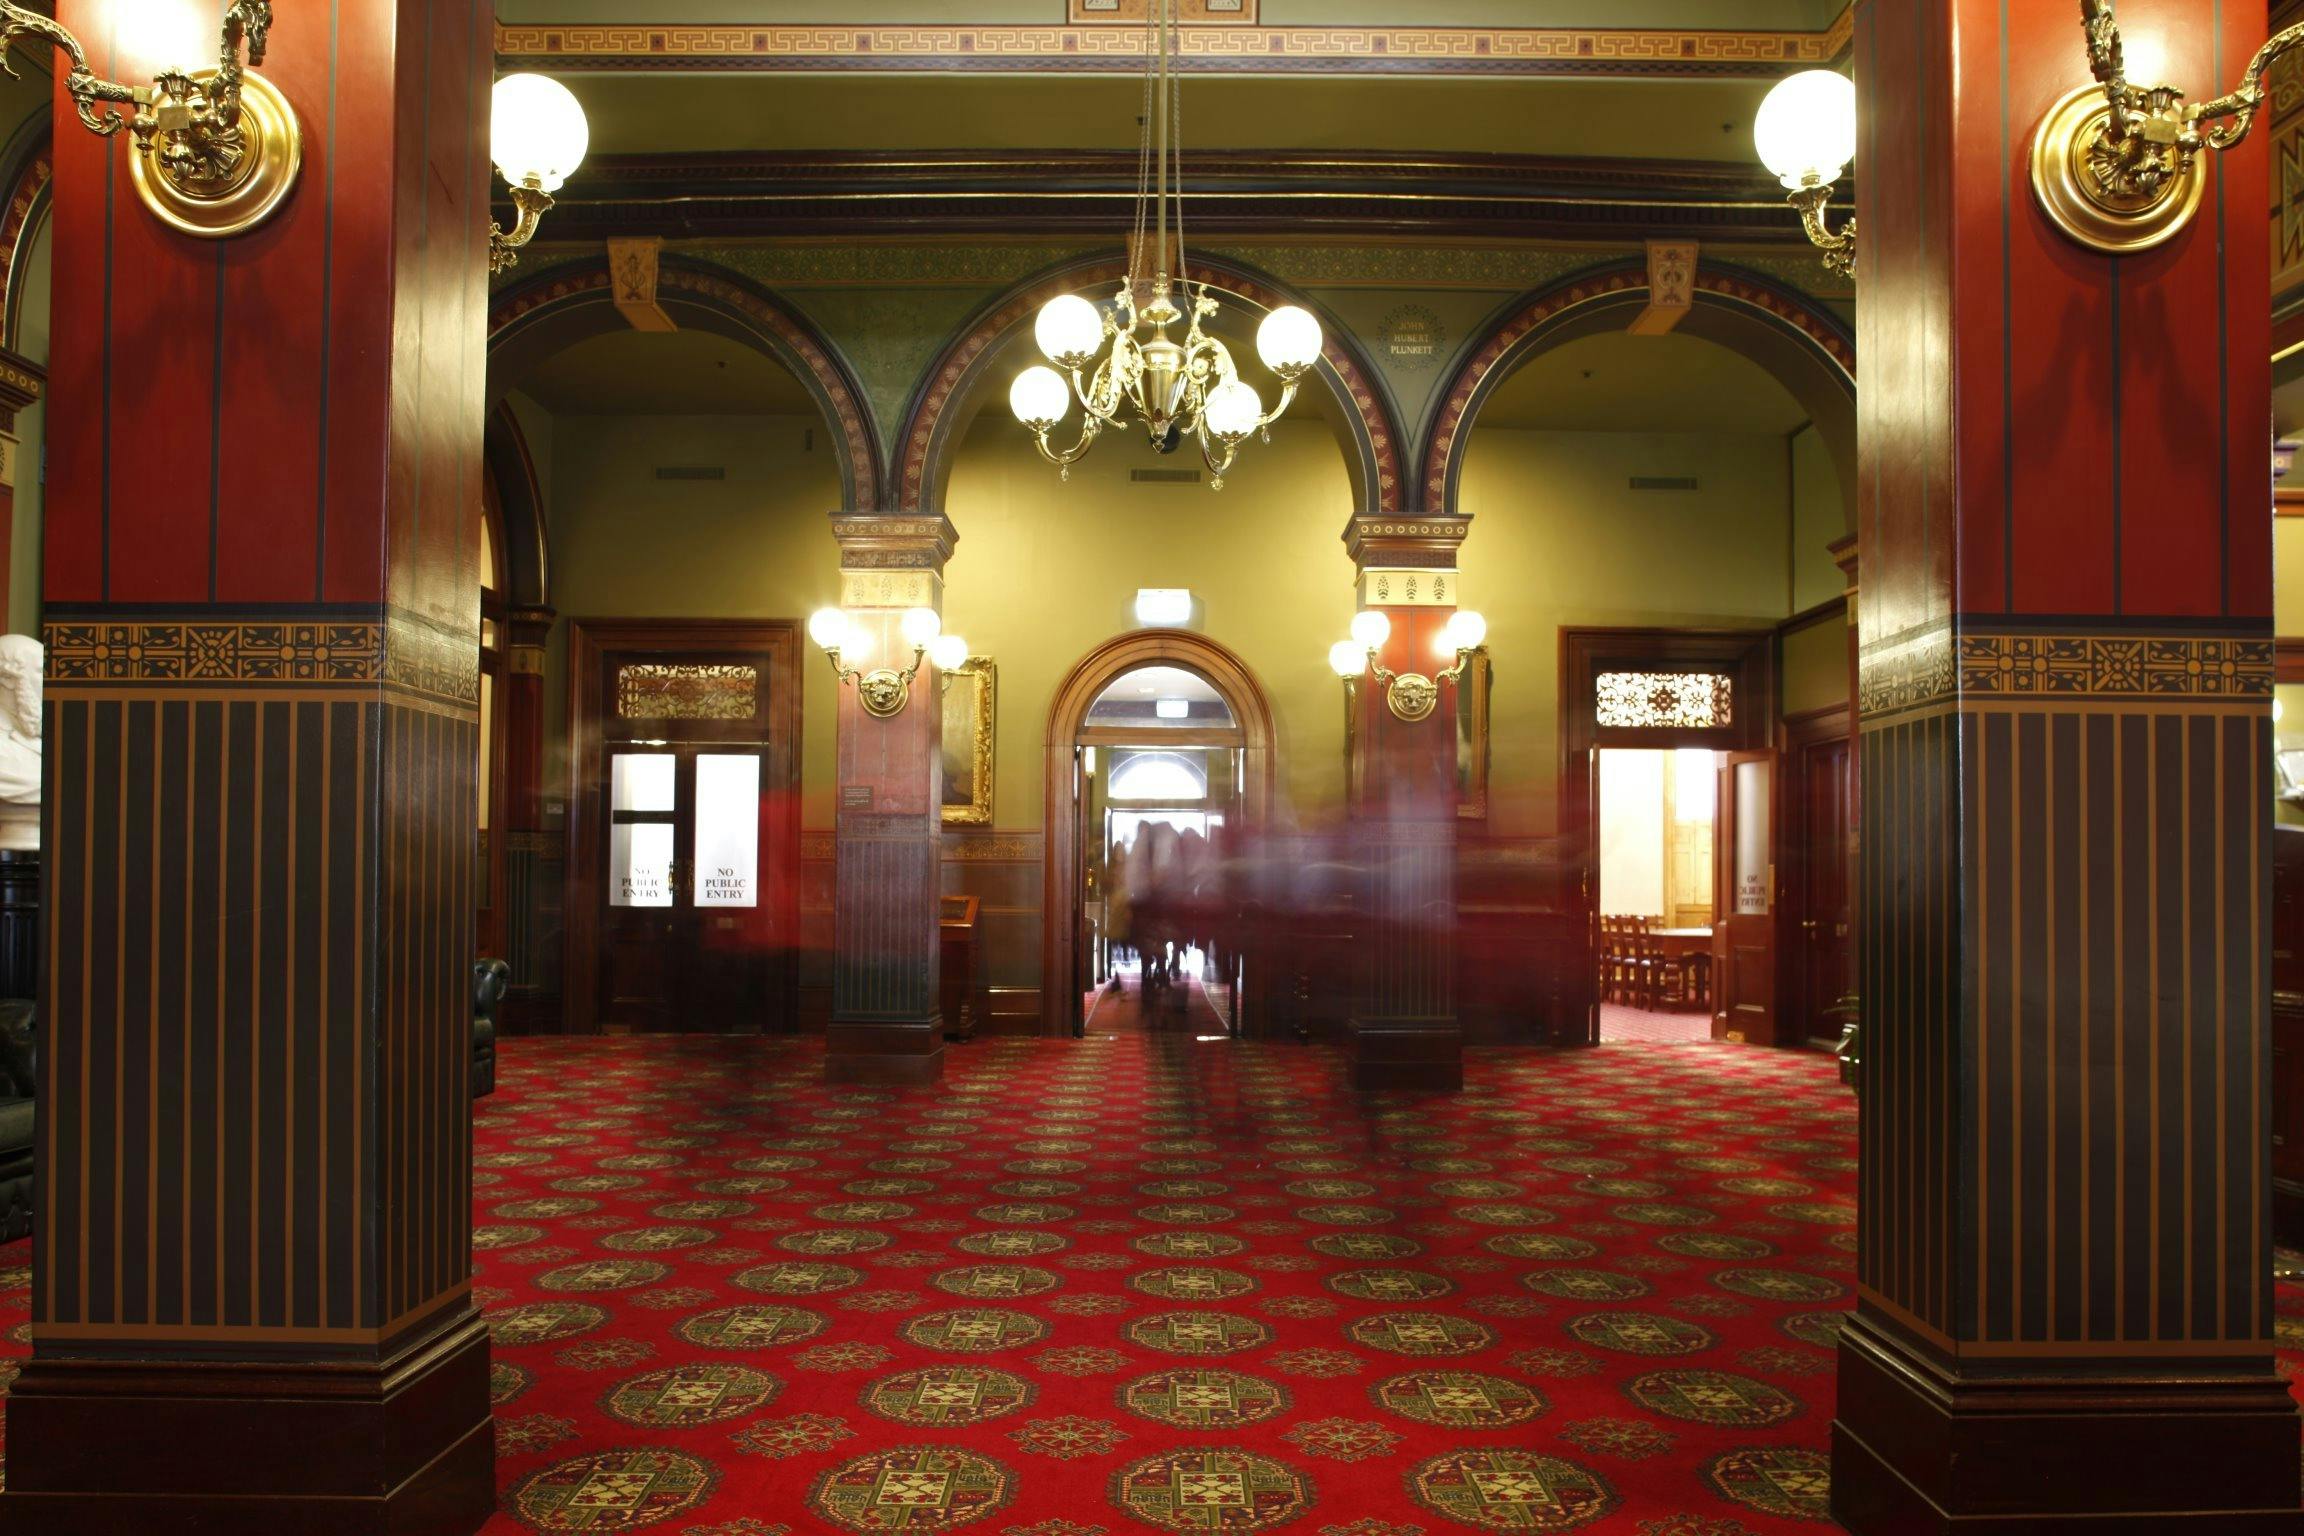 Free Tour of NSW Parliament | Sydney, Australia - Official Travel